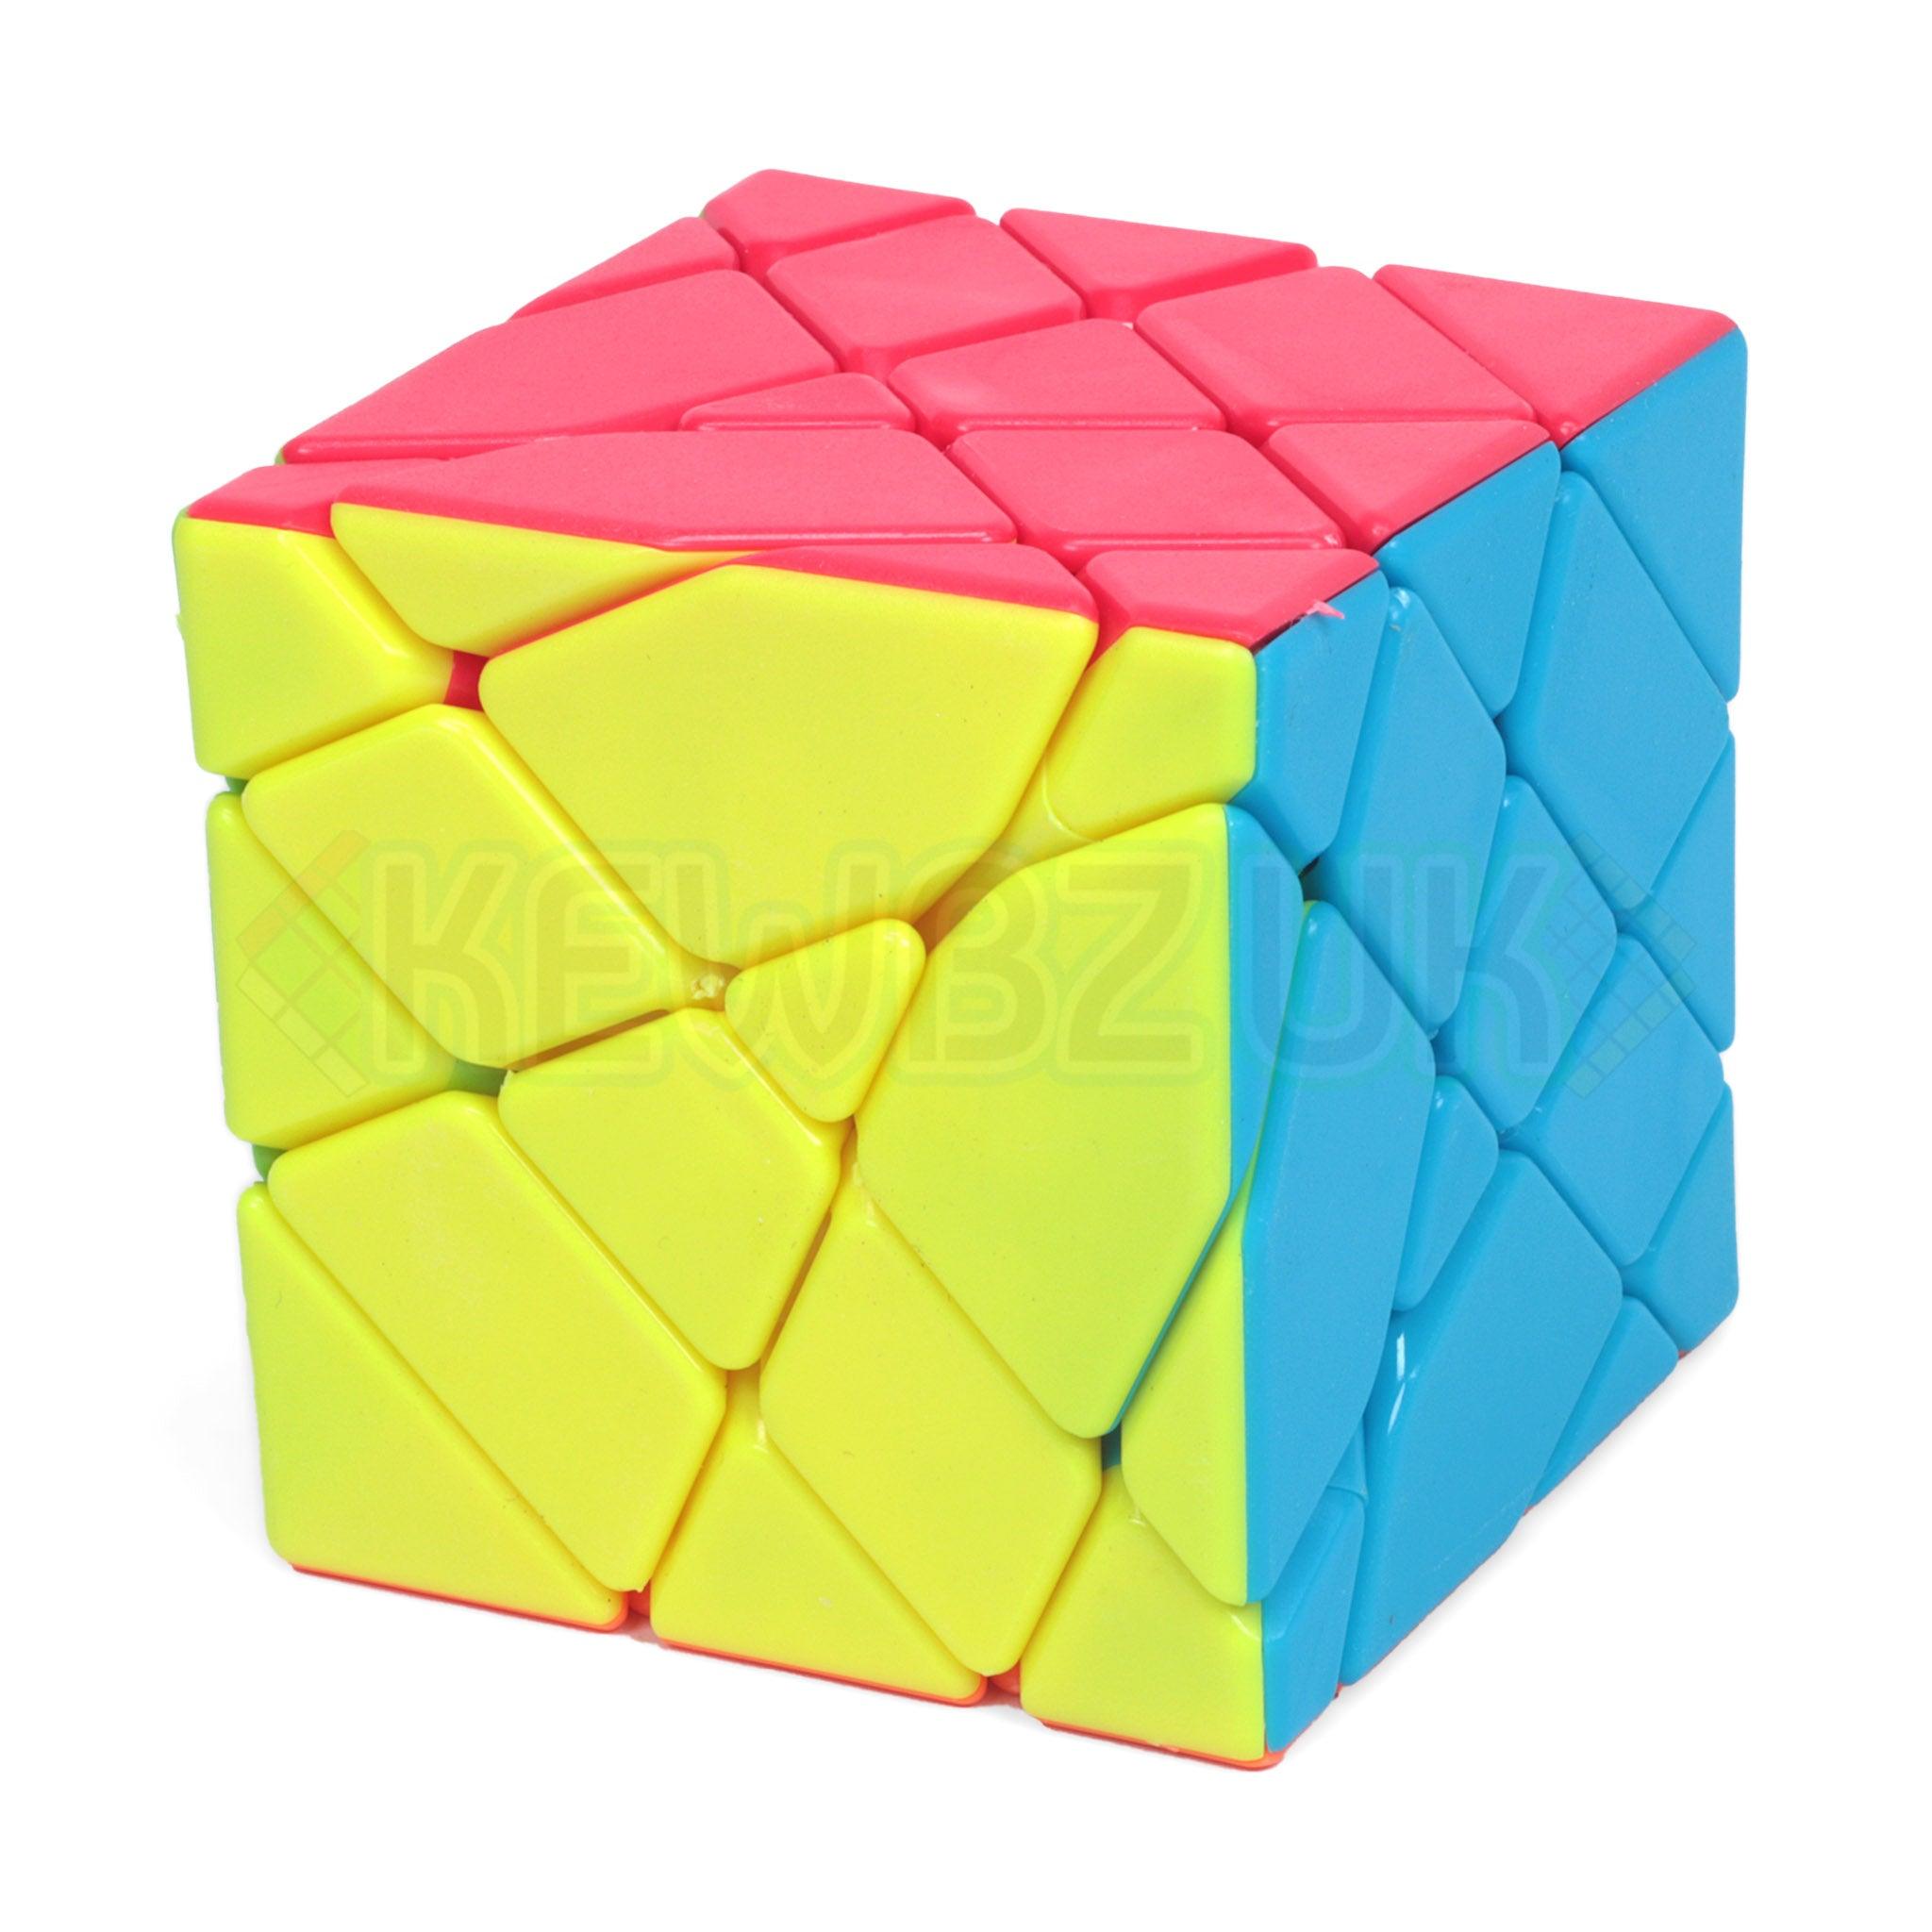 FanXin 4x4 Axis Cube